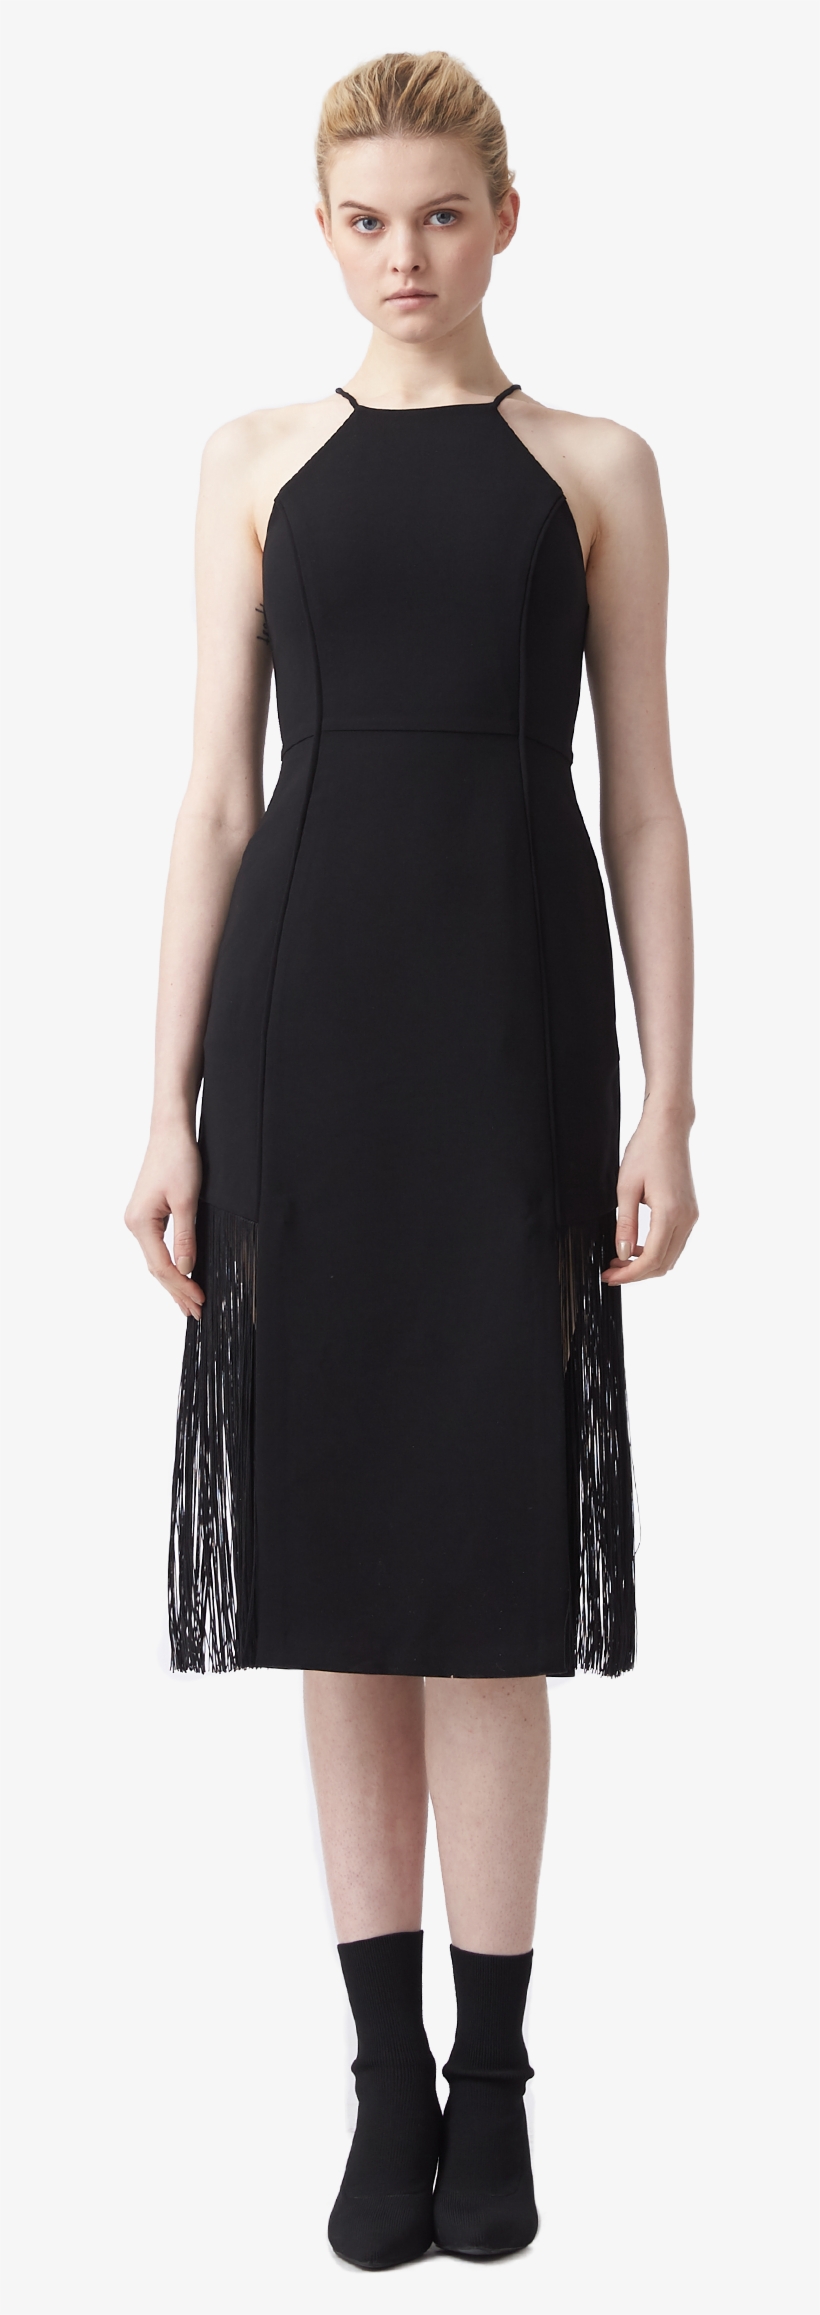 Arman Embroidered Toga Full Dress $279 - Little Black Dress, transparent png #6287290